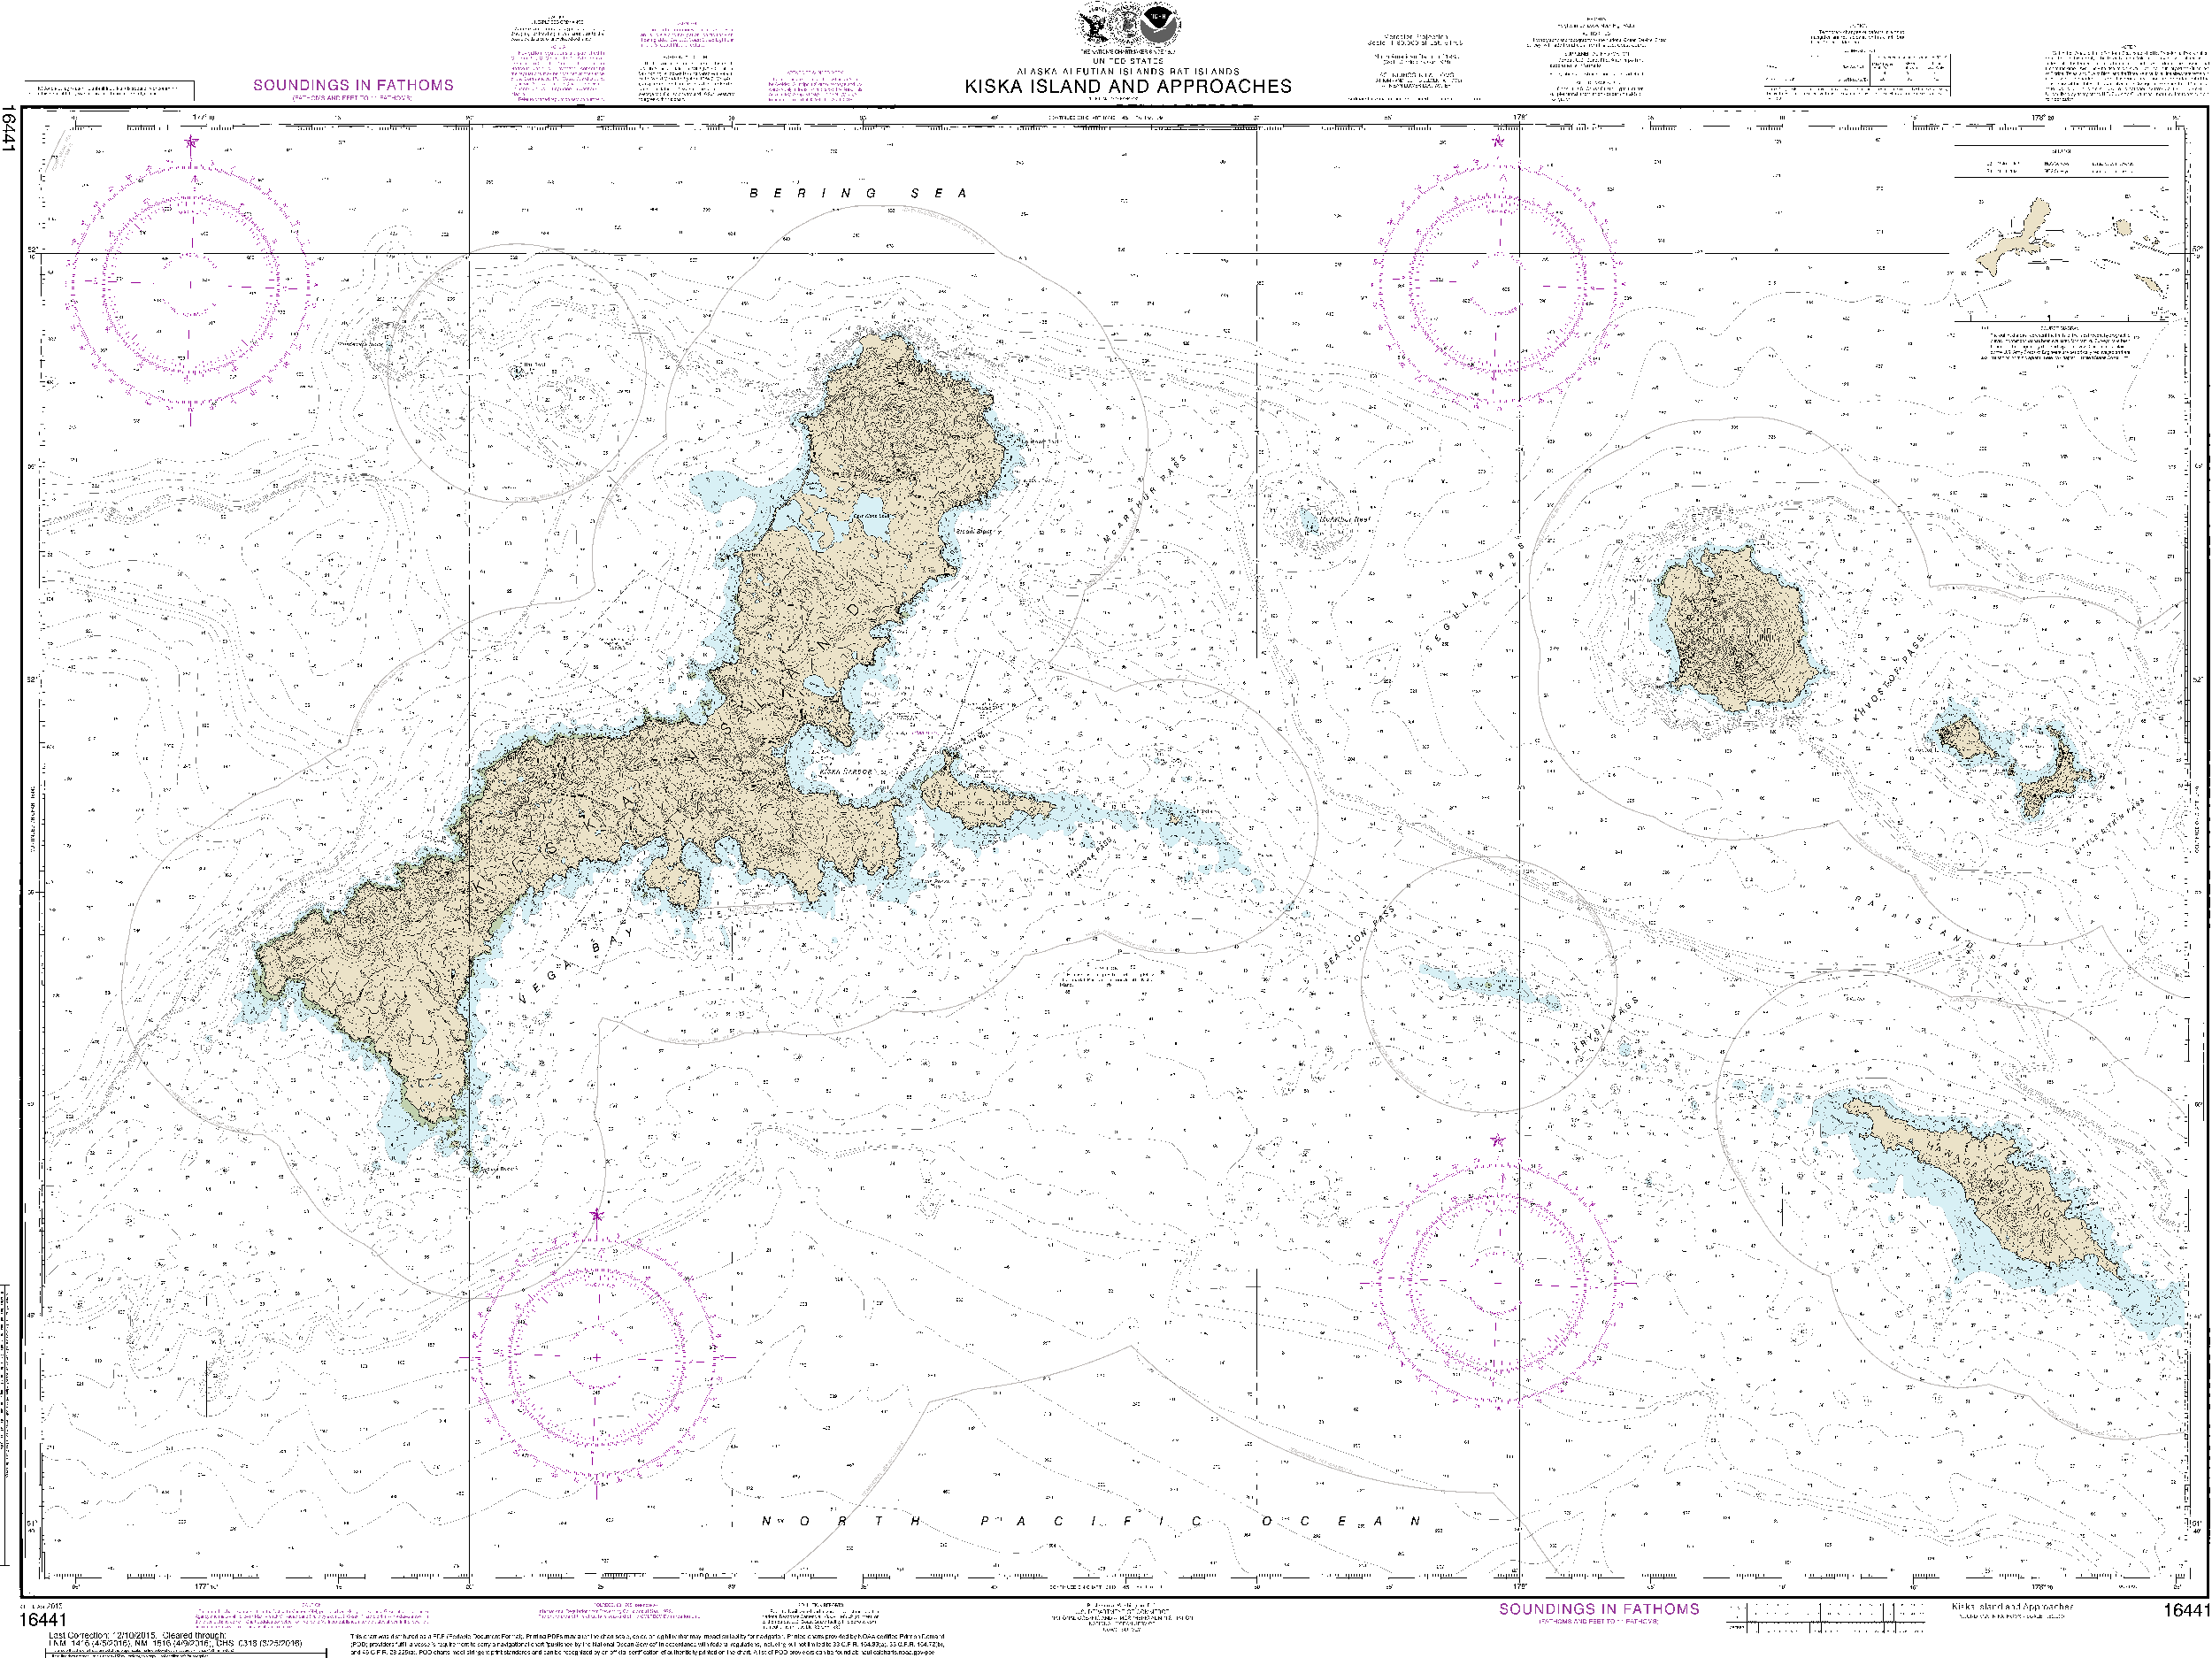 NOAA Nautical Chart 16441: Kiska Island and approaches